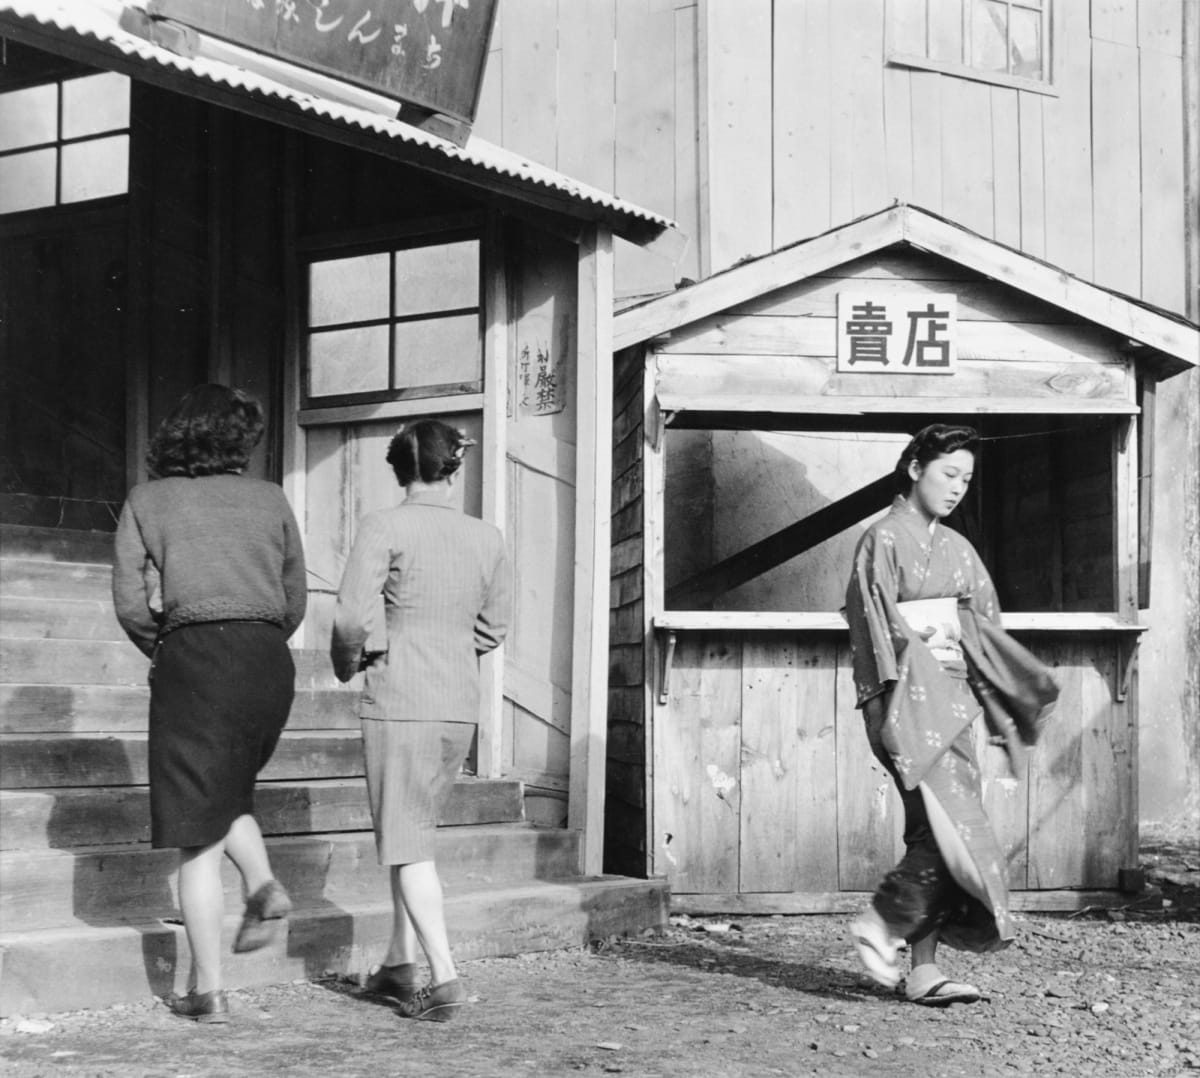 Three Actresses, Movie Set. Tokyo, Japan 1947 by Edward R. Miller  Image: Three Japanese women on a movie set. 